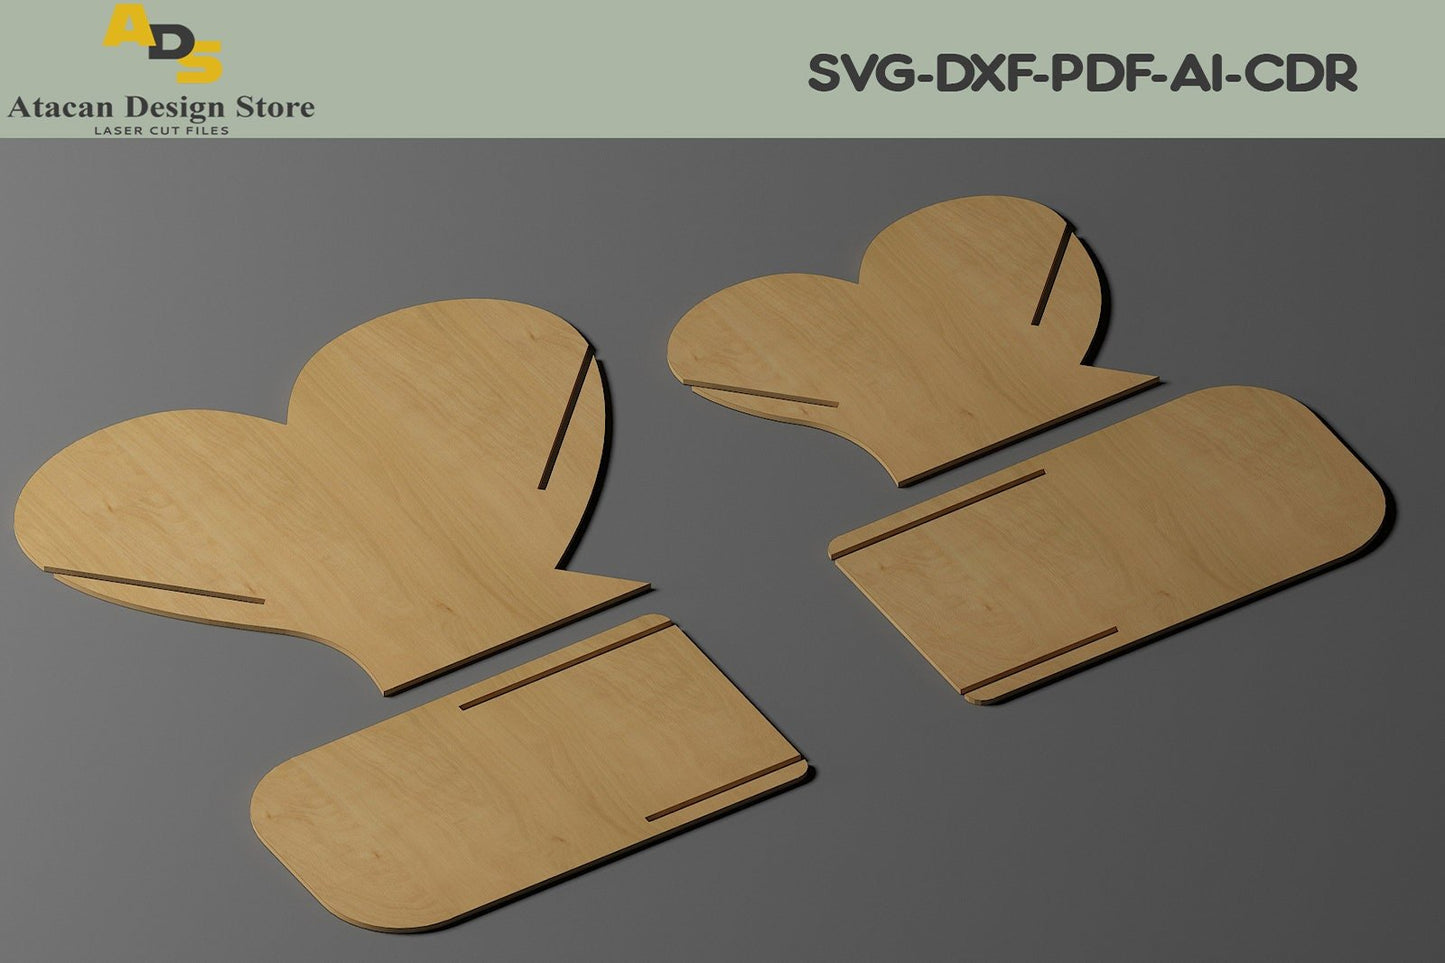 Heart Bowl Laser Cutting Files / Wood DIY Digital Templates ADS213